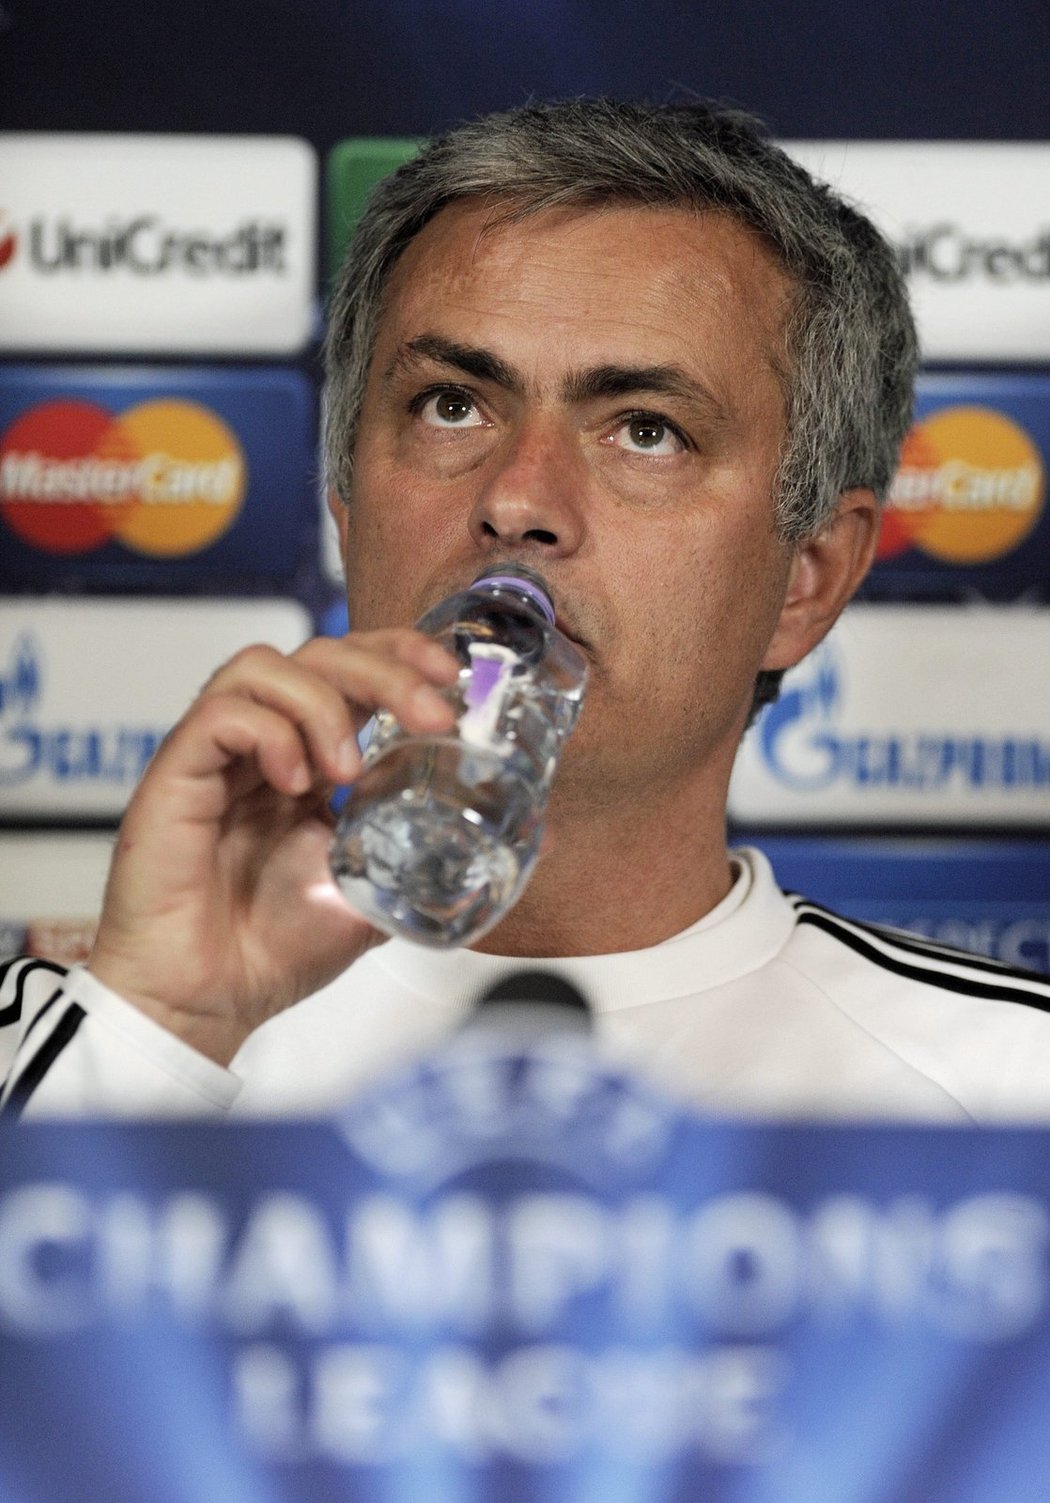 Trenér Chelsea José Mourinho na tiskové konferenci